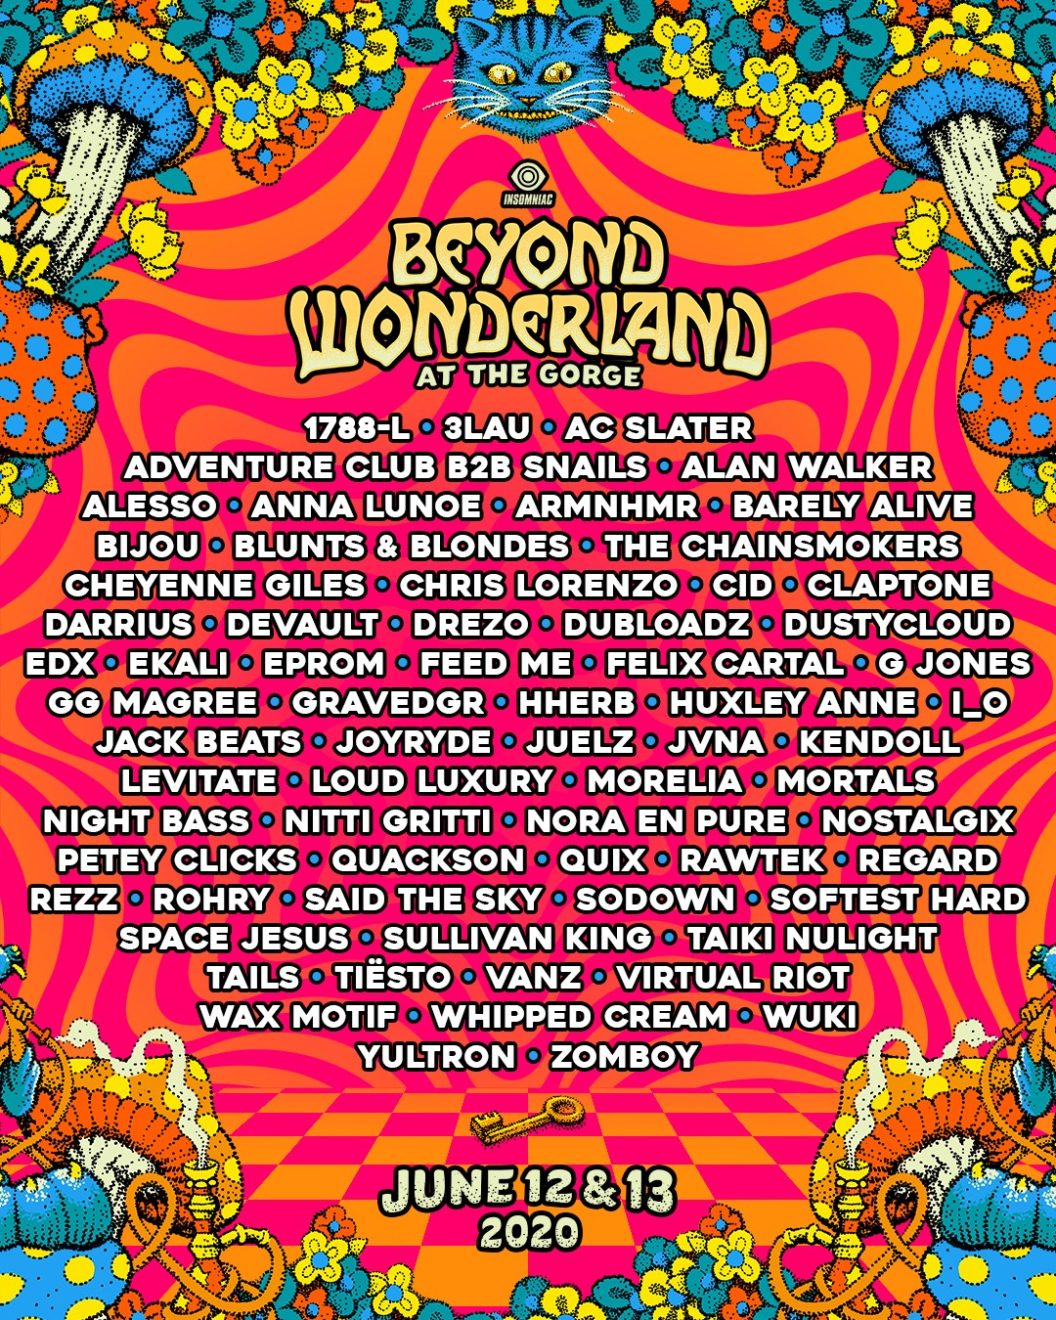 Beyond wonderland 2020 lineup - kizaviewer